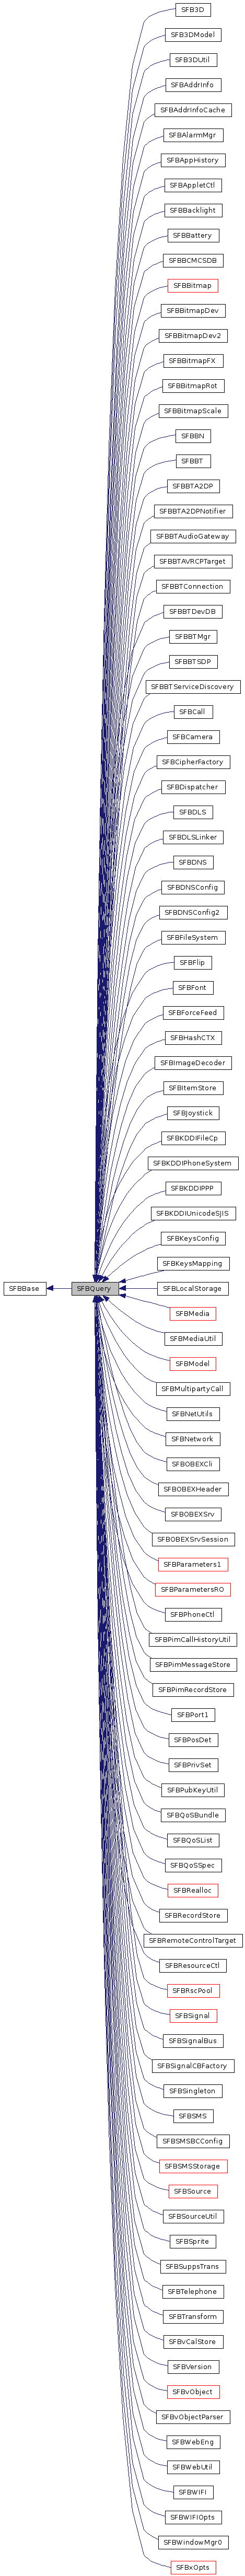  Inheritance diagram of SFBQueryClass